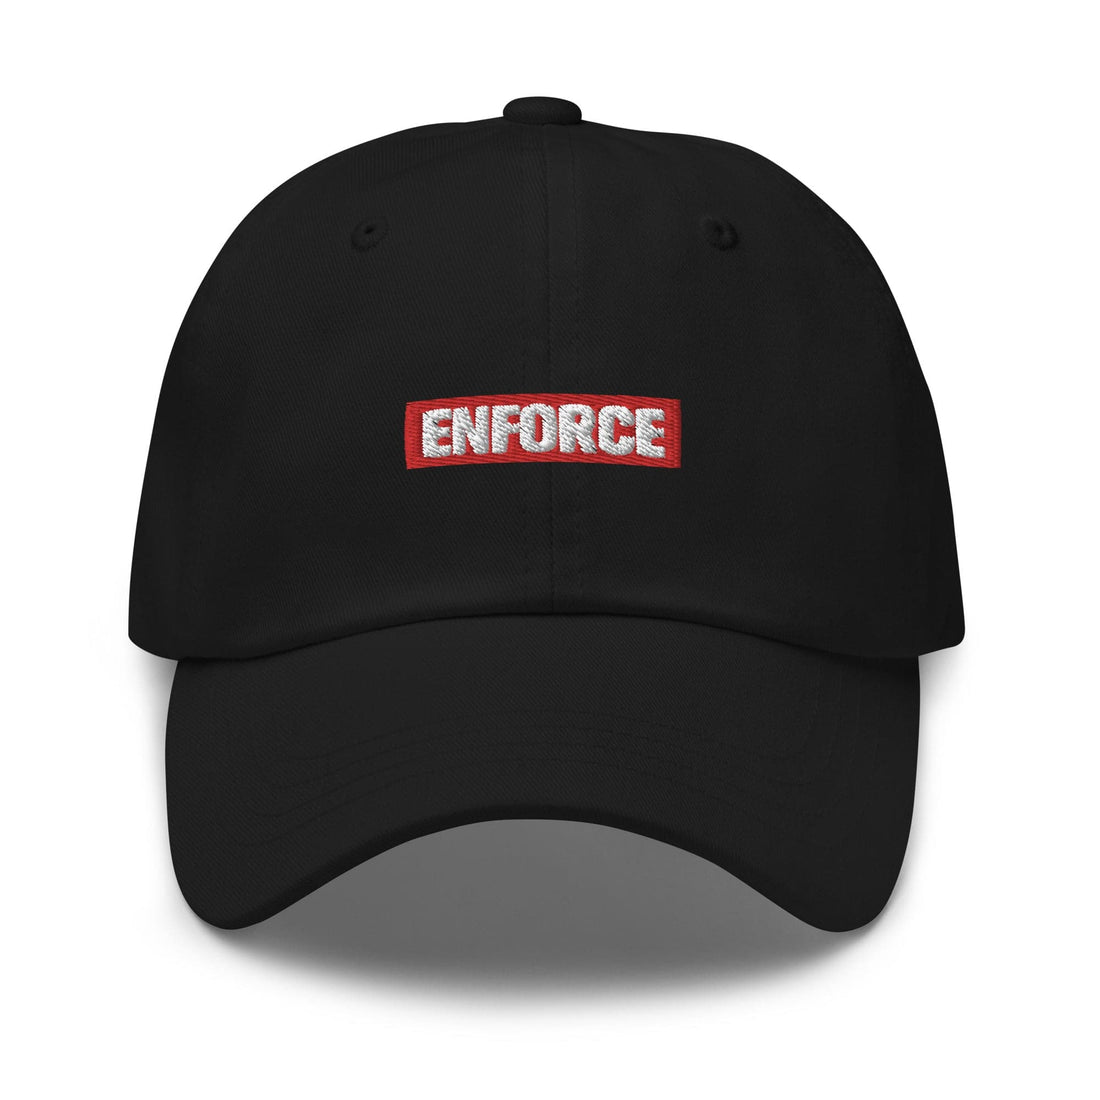 Enforce - Dad Hat